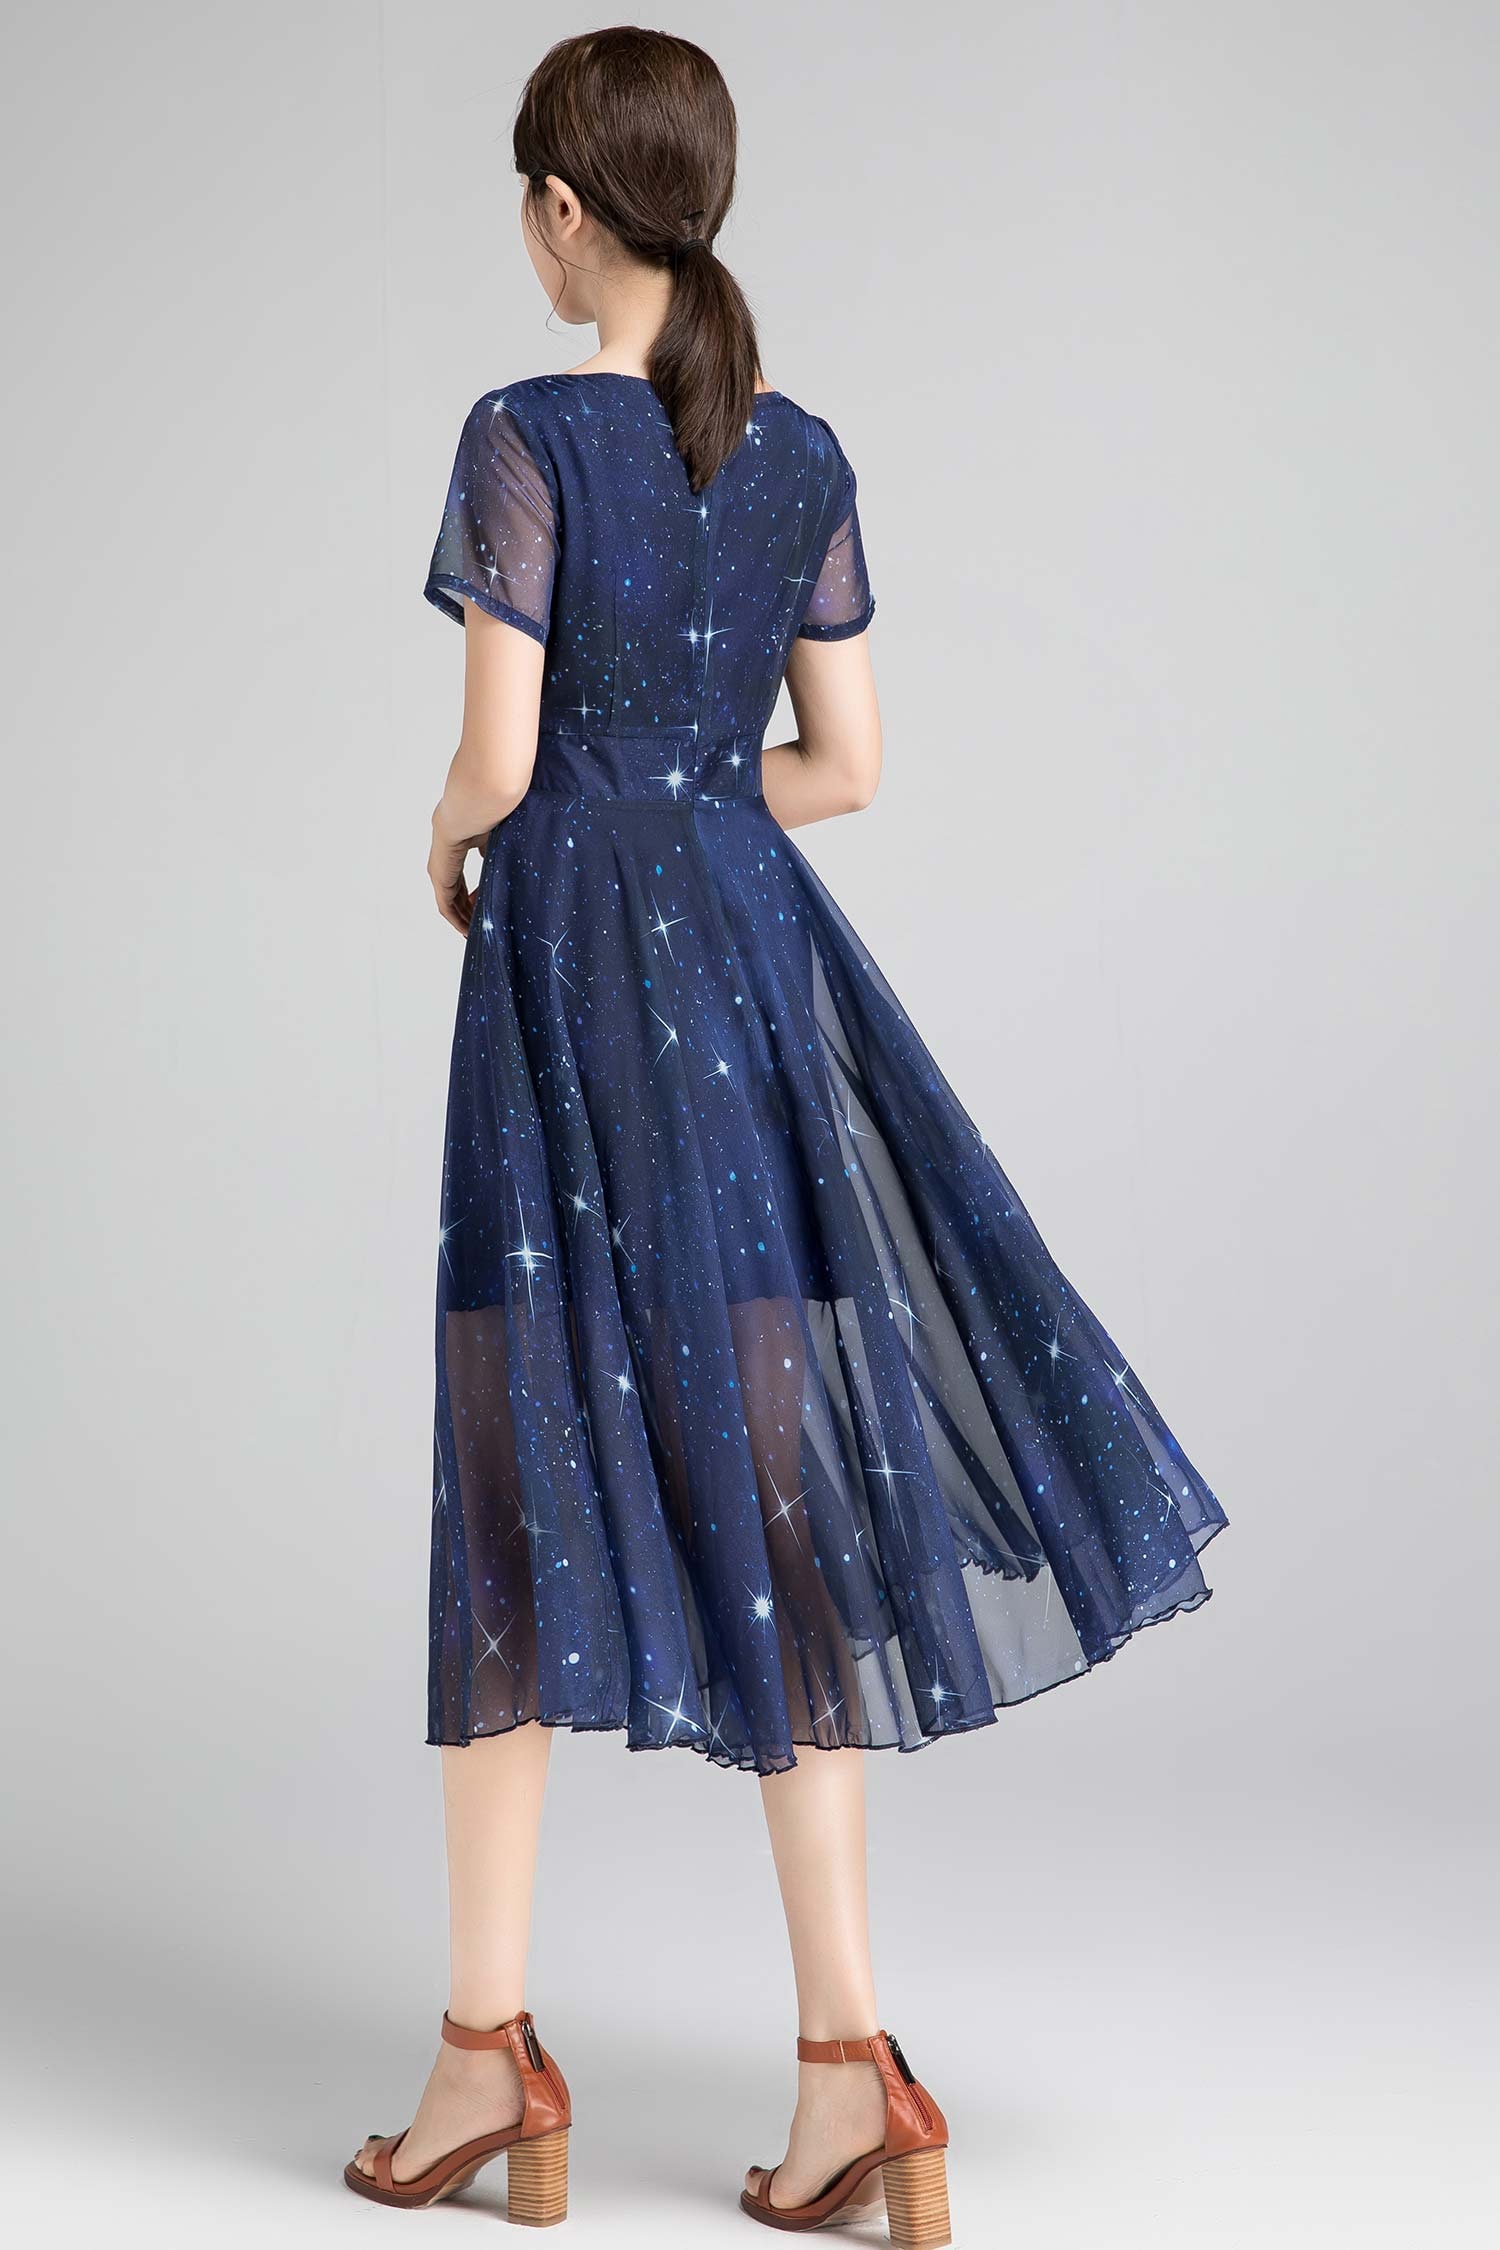 Starry Night Out Swing Dress Short sleeve Chiffon dress fit | Etsy